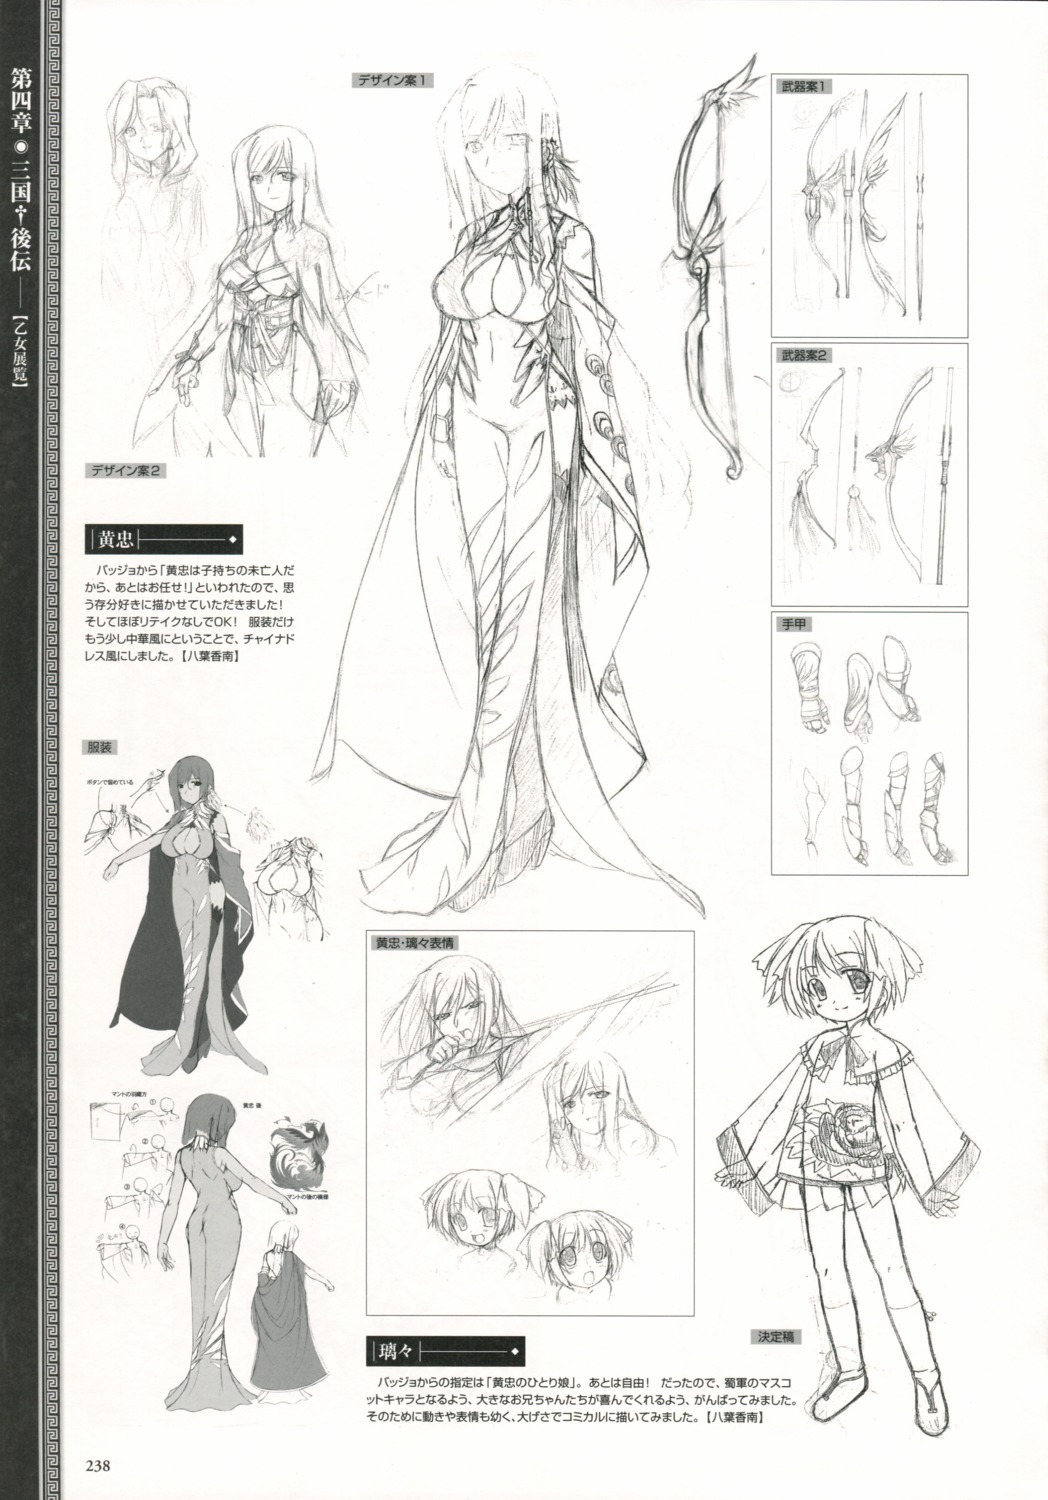 baseson character_design koihime_musou kouchuu monochrome riri sketch